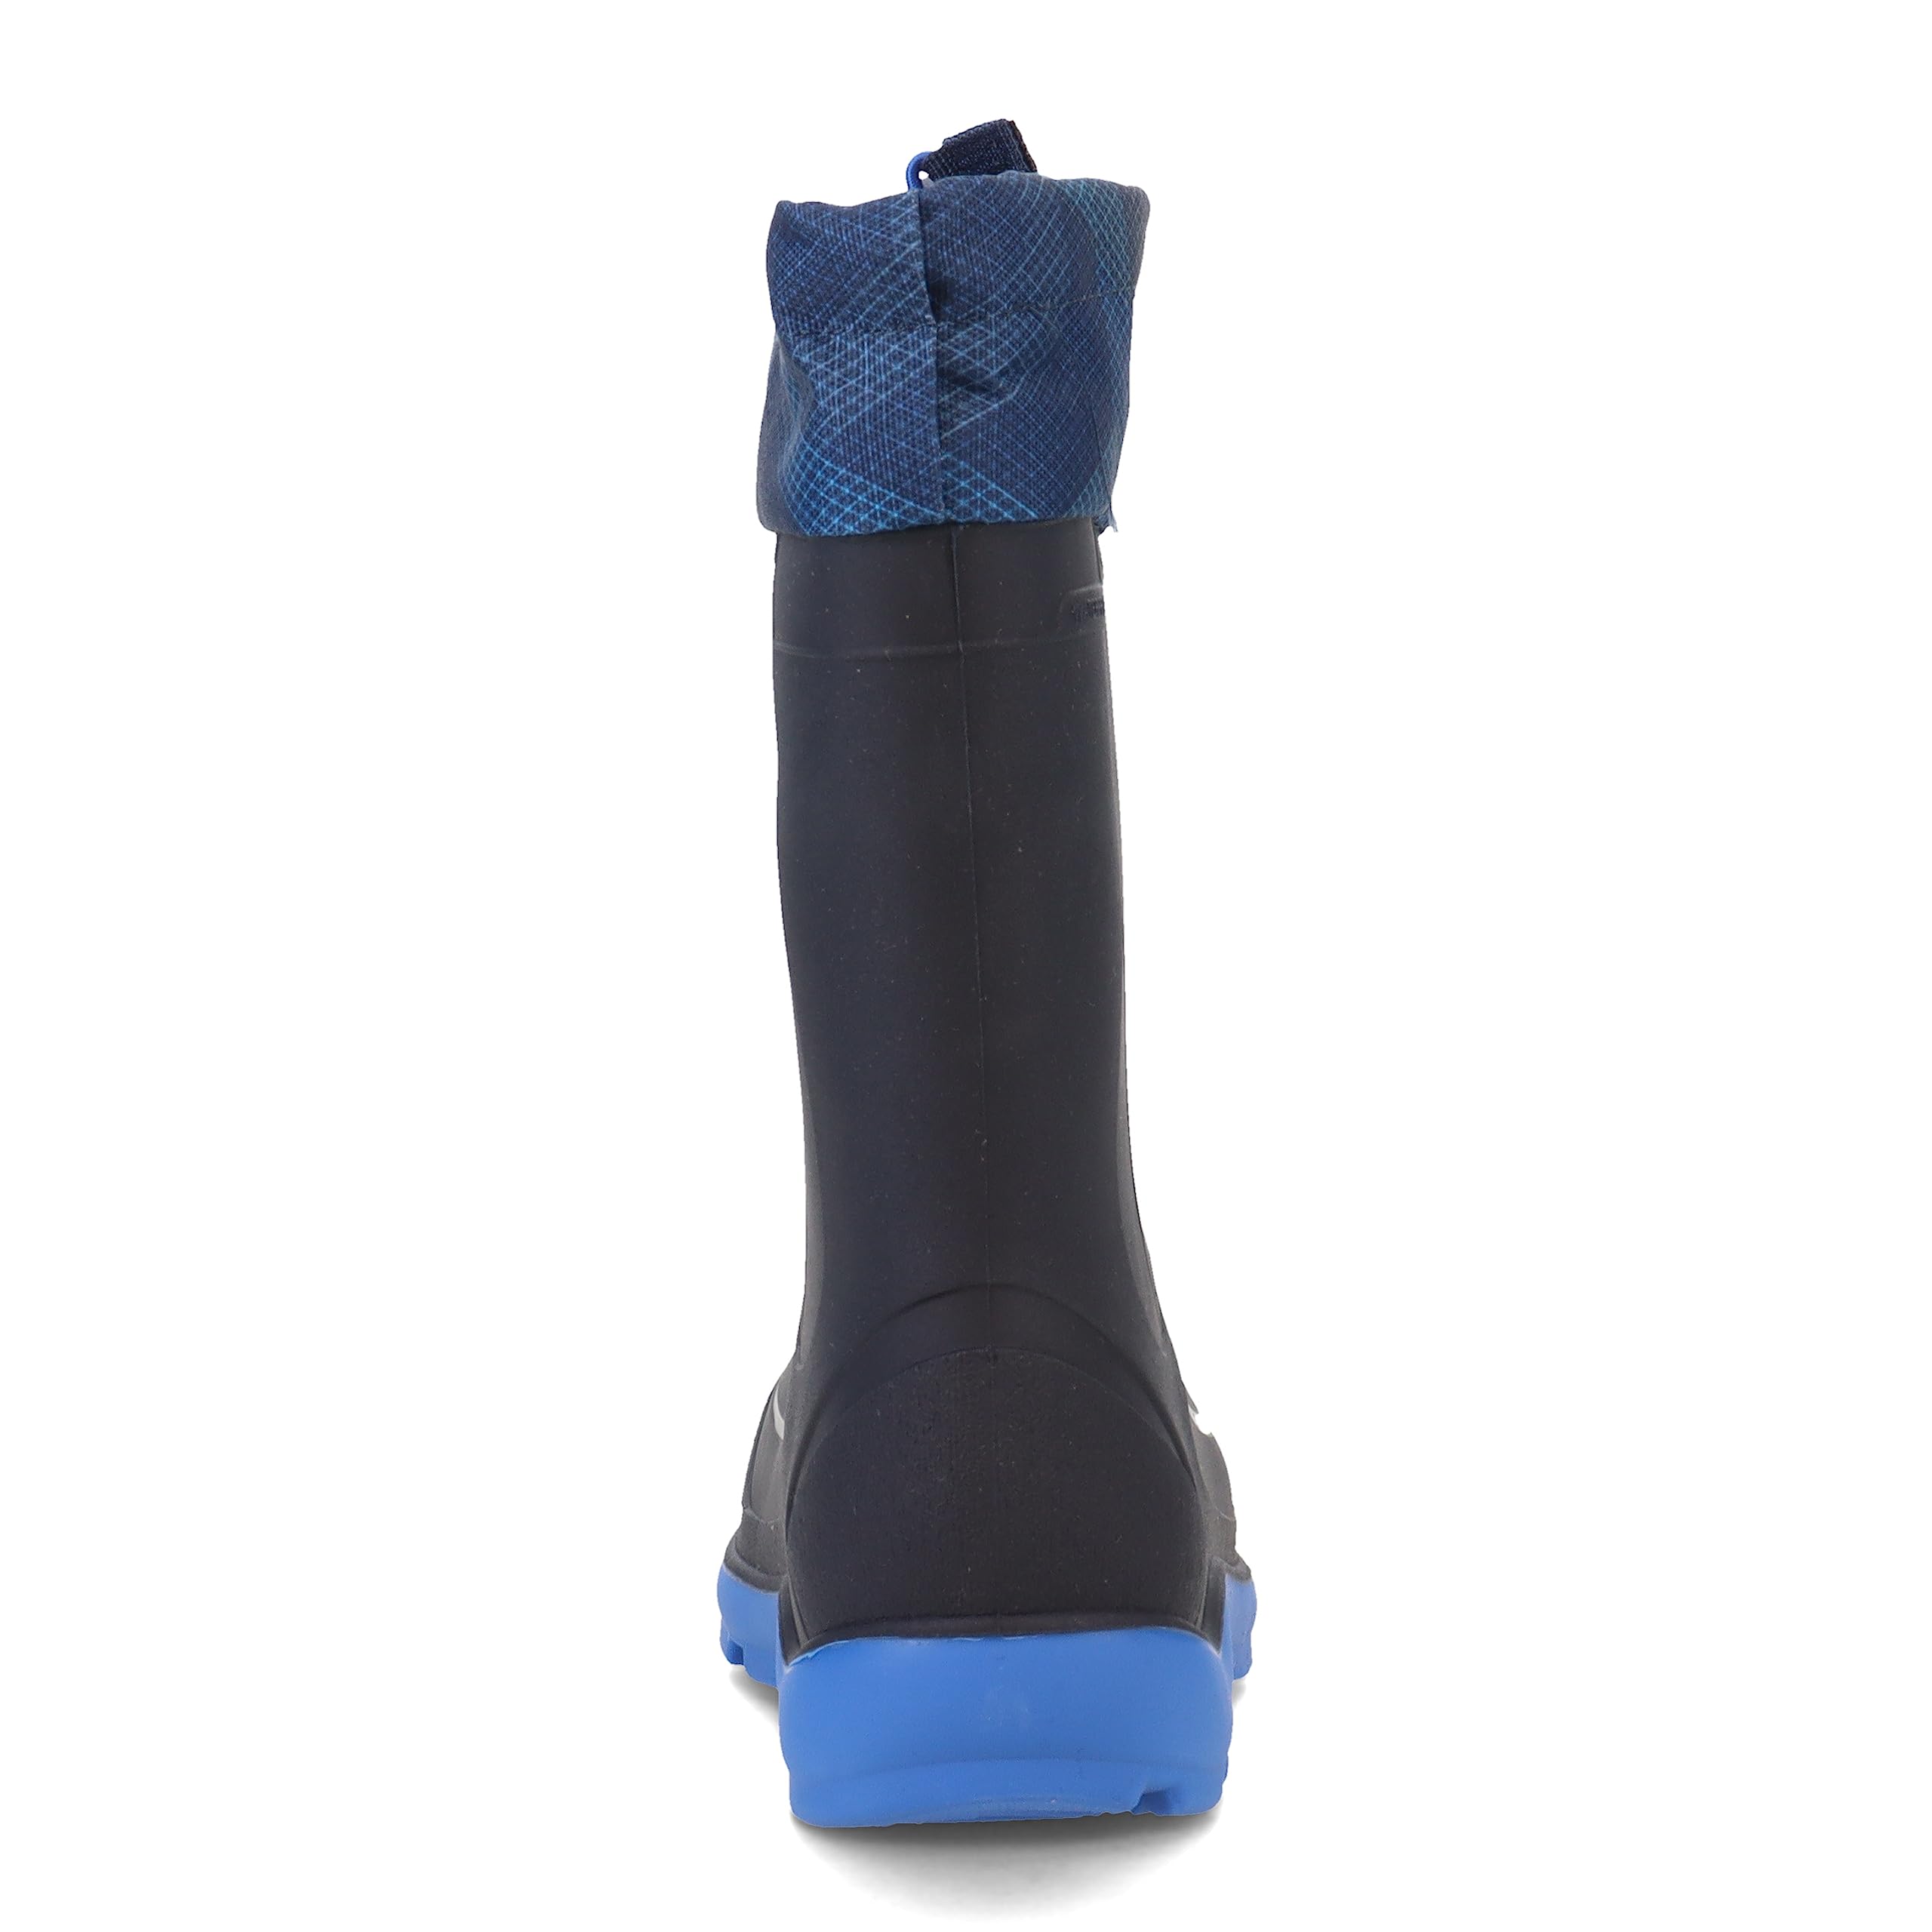 Kamik Unisex-Child Kids Snobuster2 Warm Waterproof Winter Boots Snow